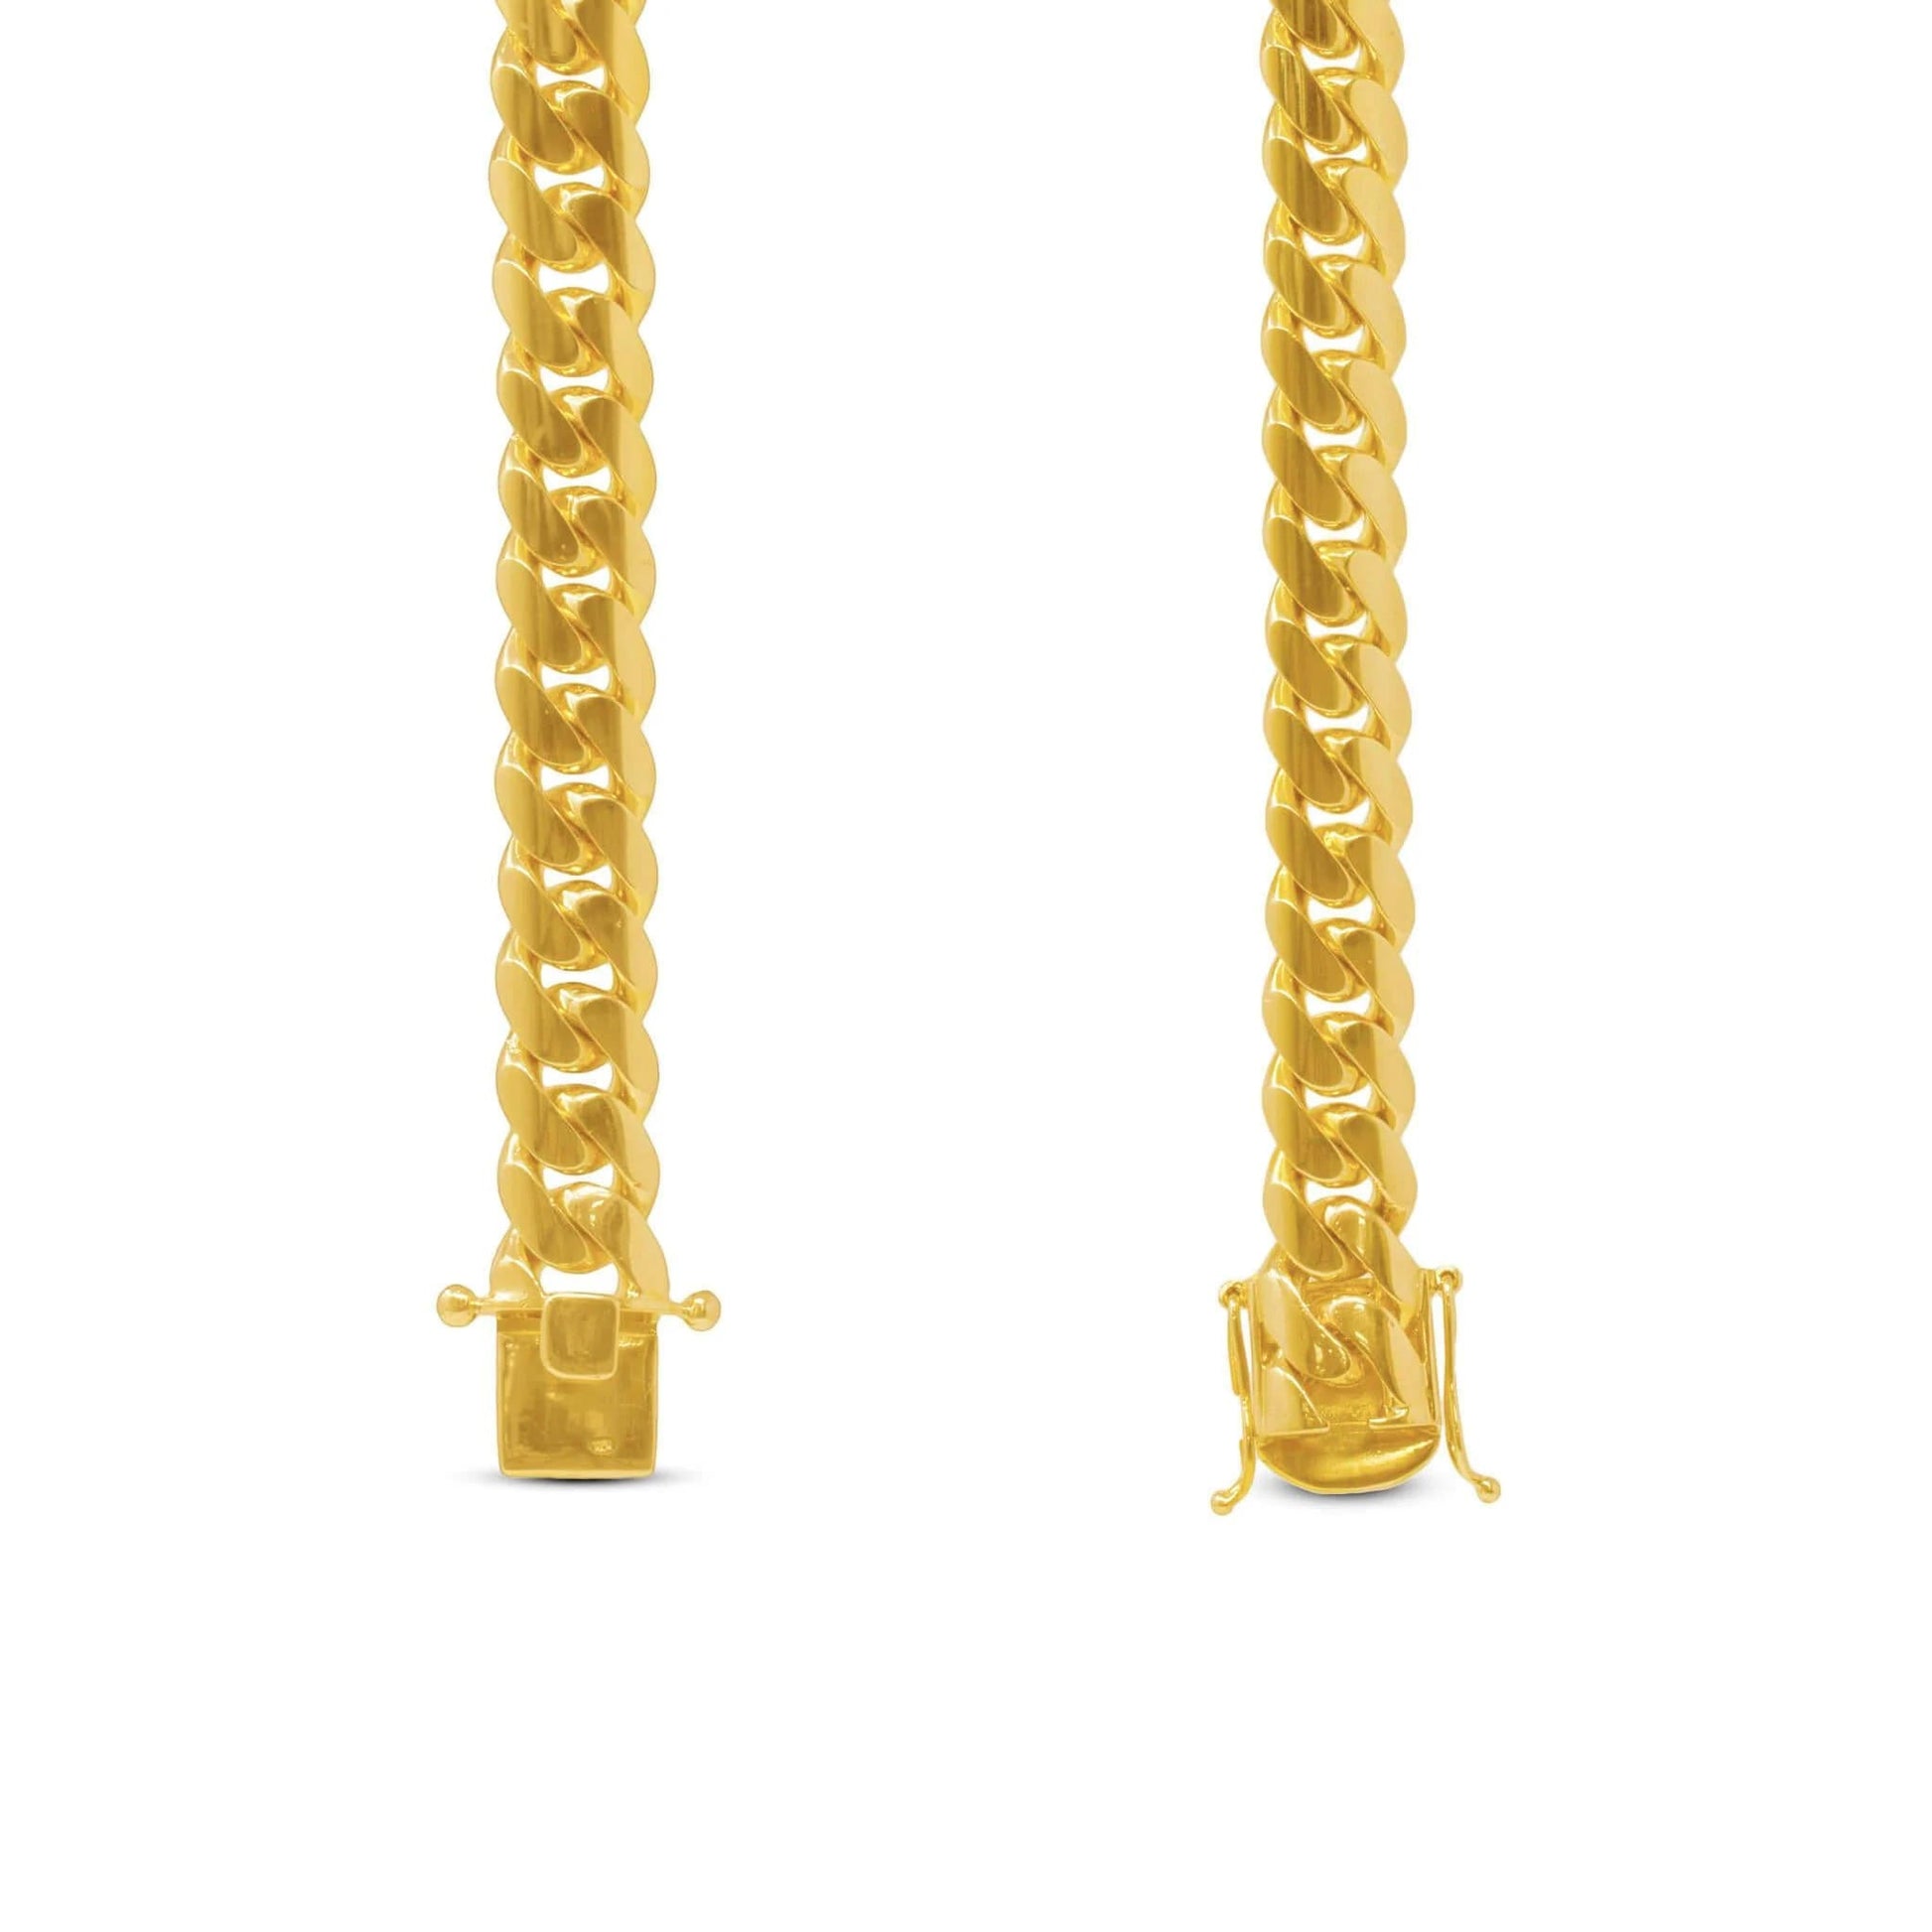 10mm Miami Cuban Link Chain in 14K Solid Yellow Gold - Vera Jewelry in Miami